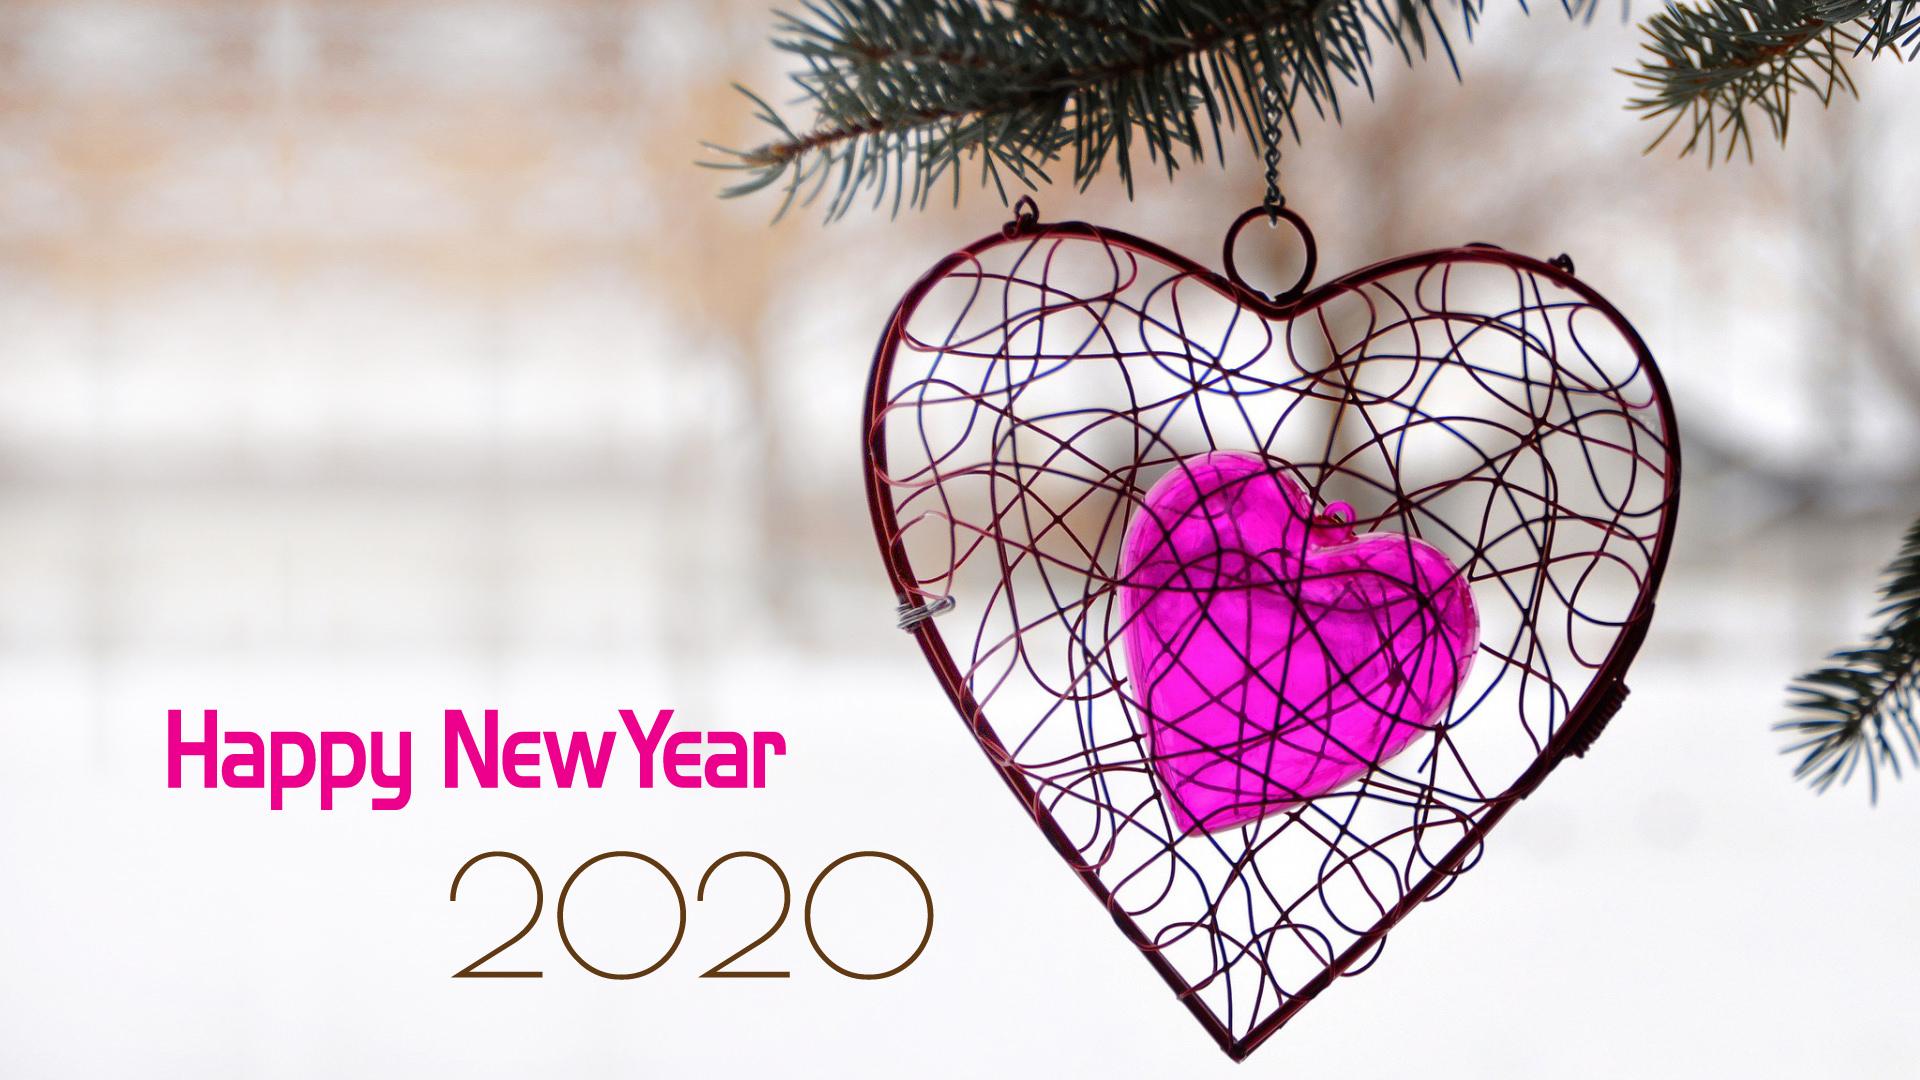 Special Happy New Year 2020 Wallpaper, HD Greetings Desktop